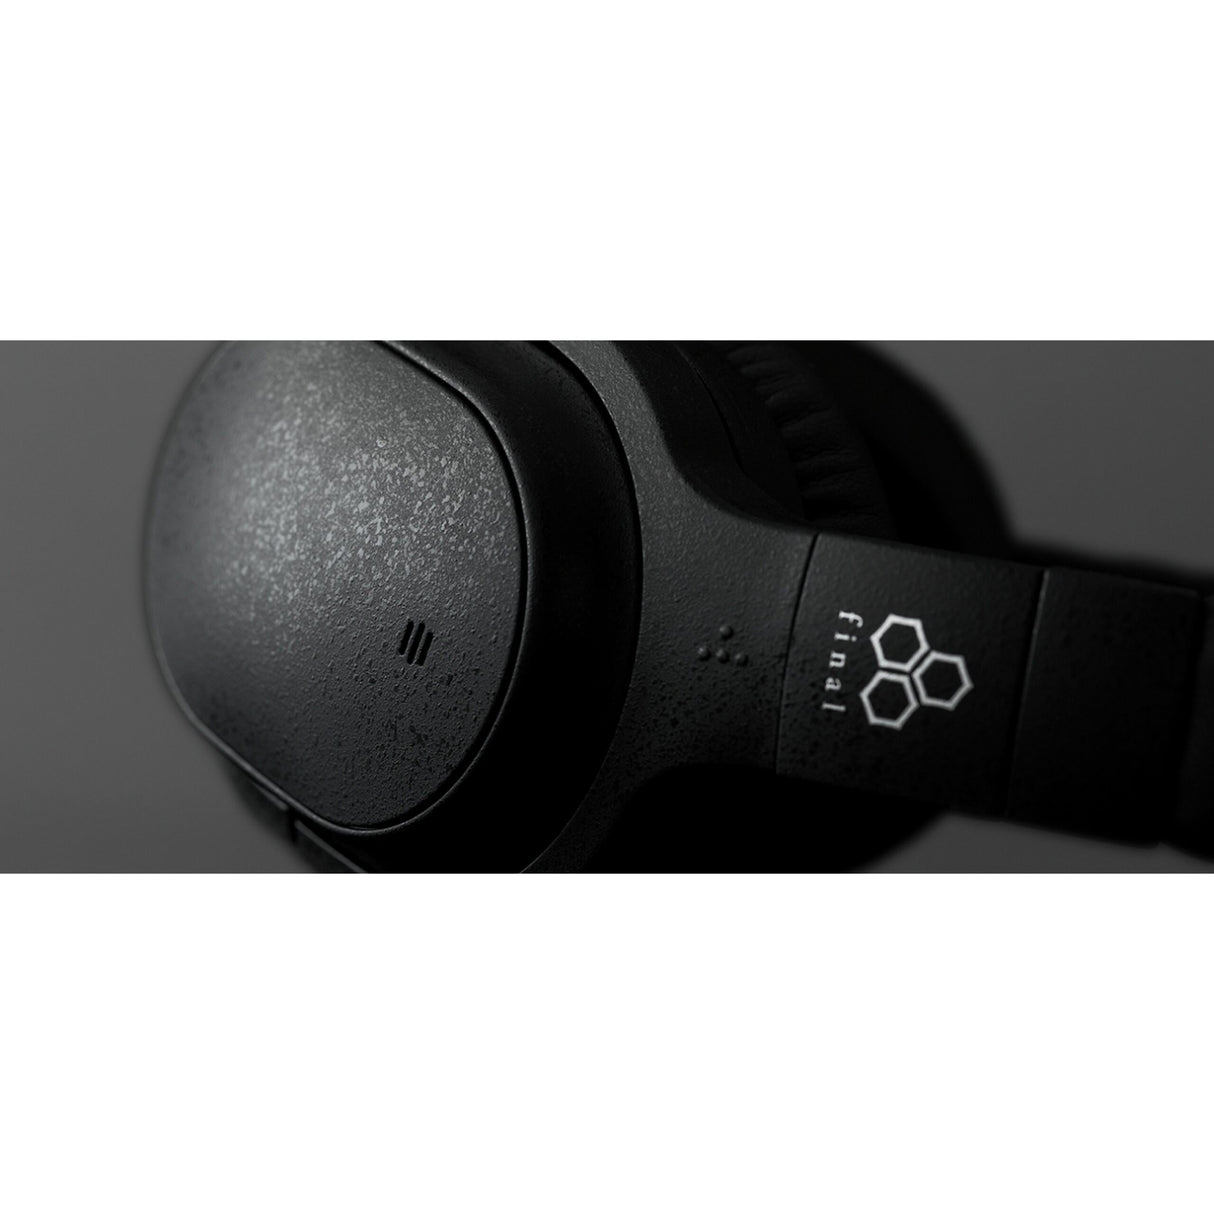 Final Audio UX3000 Hi-Fi Sound Bluetooth Wireless Over-Ear Headphones, Black